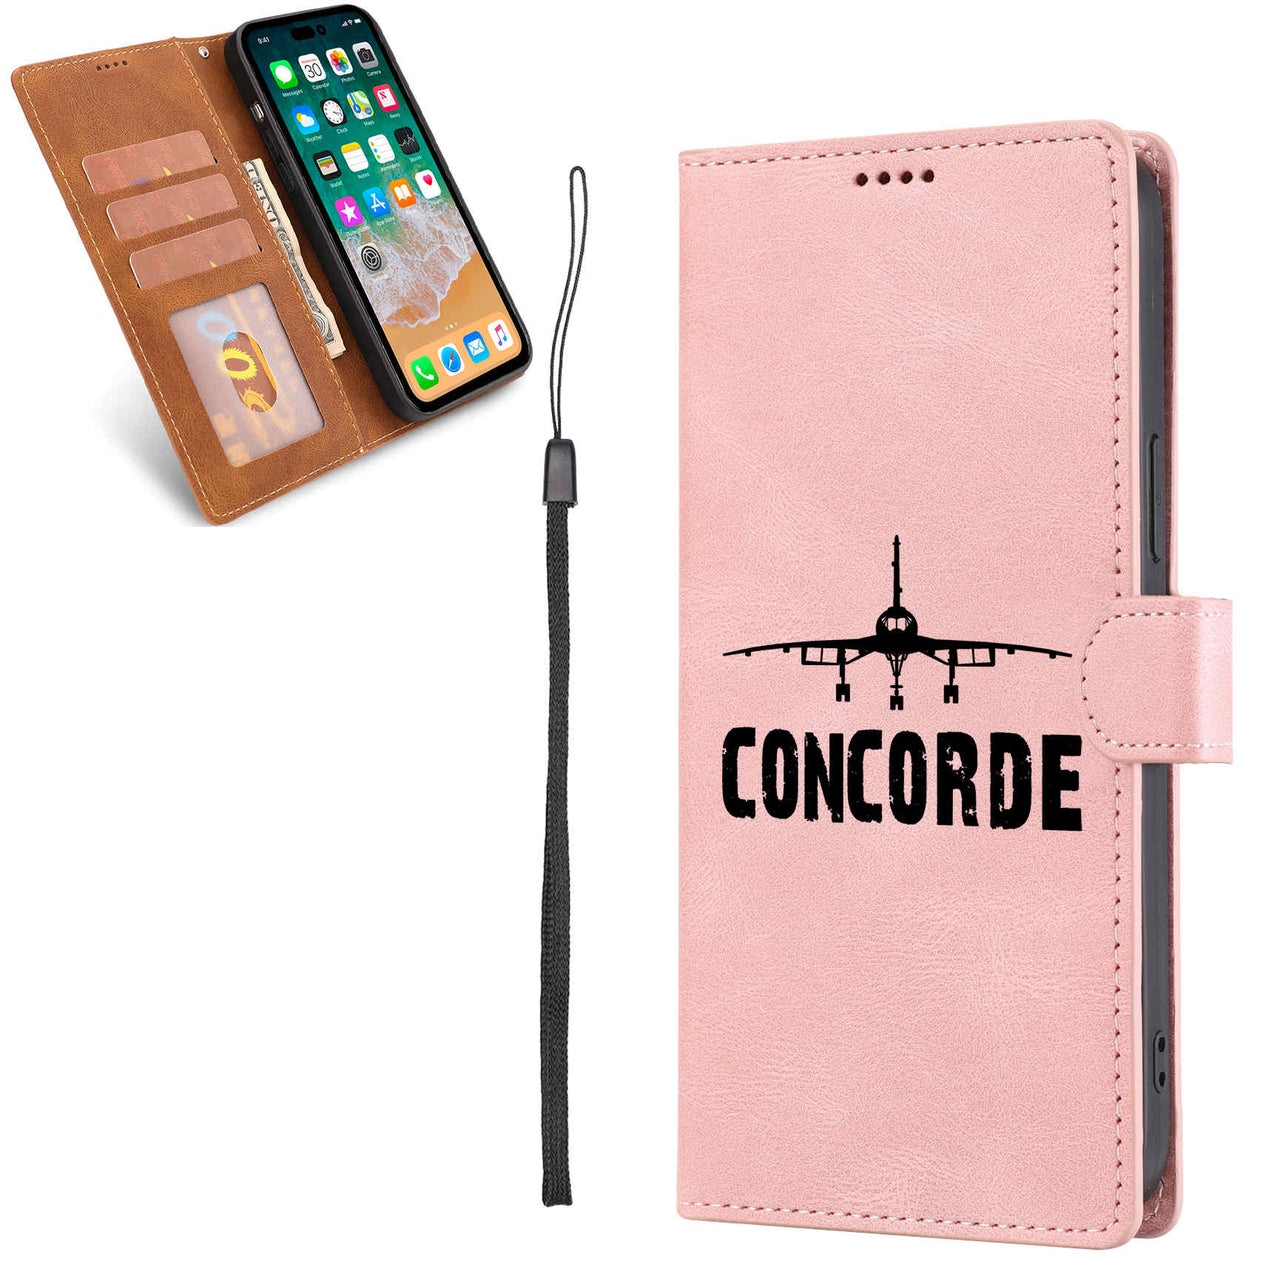 Concorde & Plane Designed Leather Samsung S & Note Cases